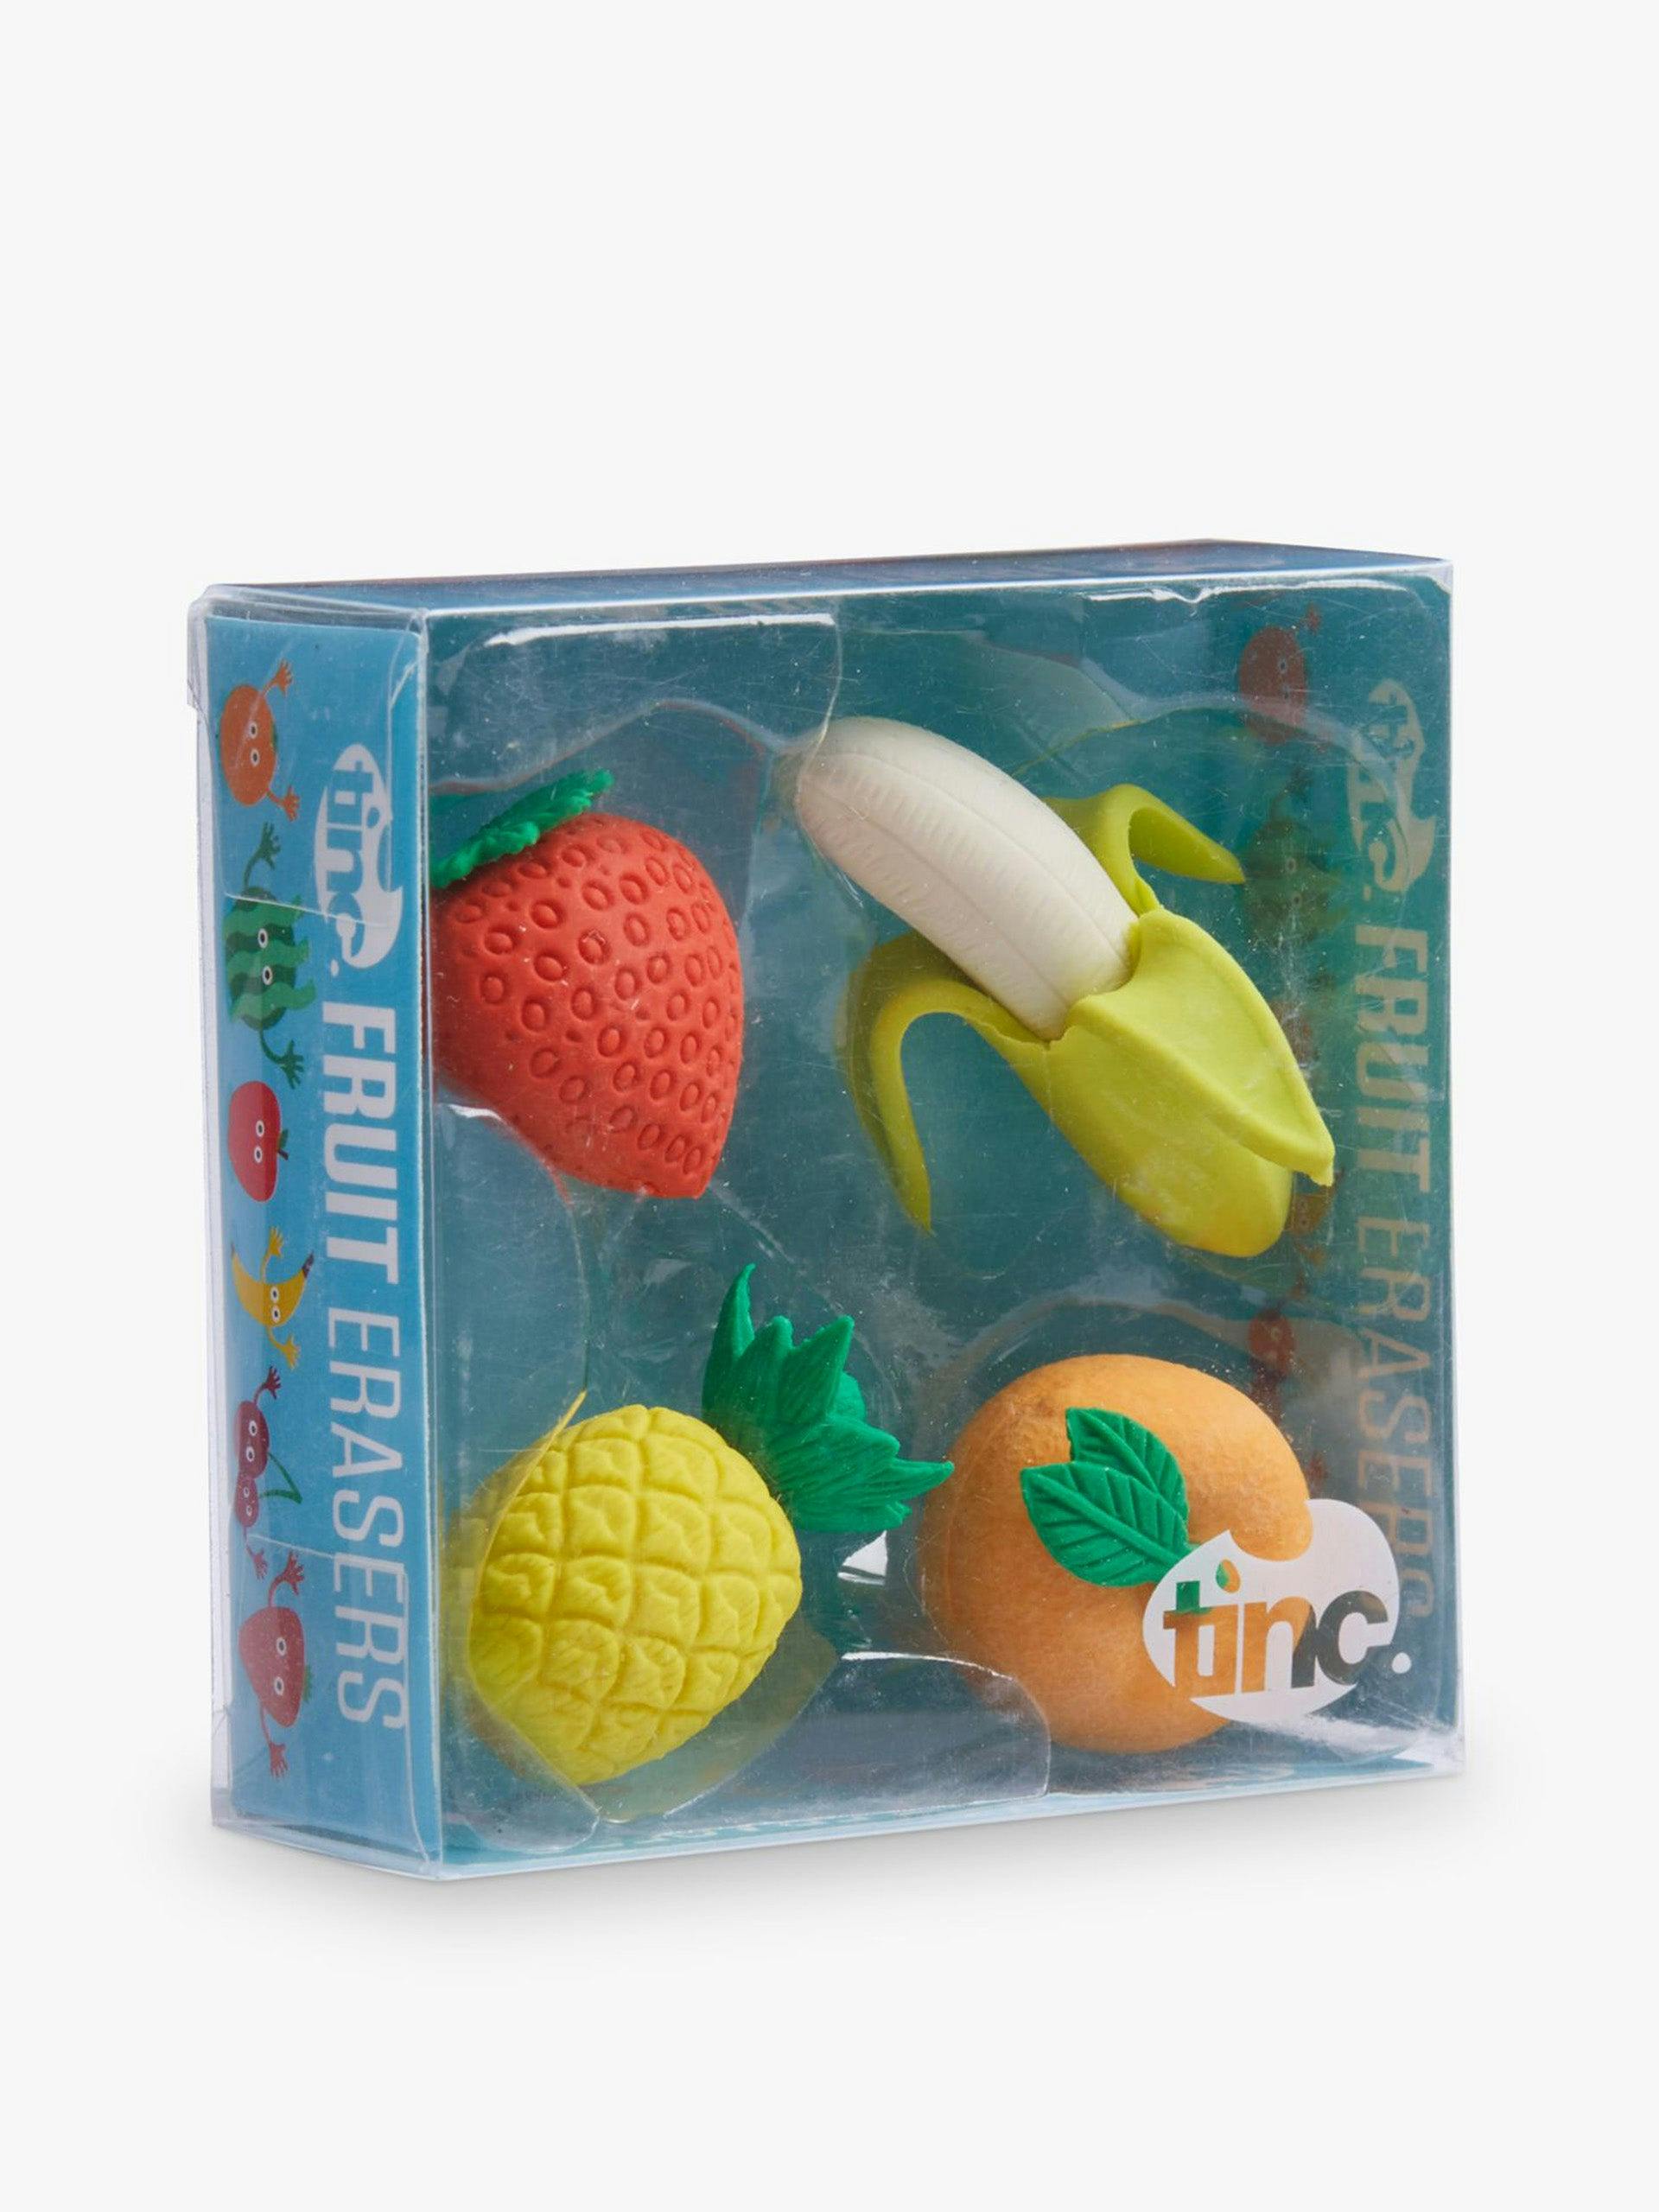 Fruit erasers (set of 4)